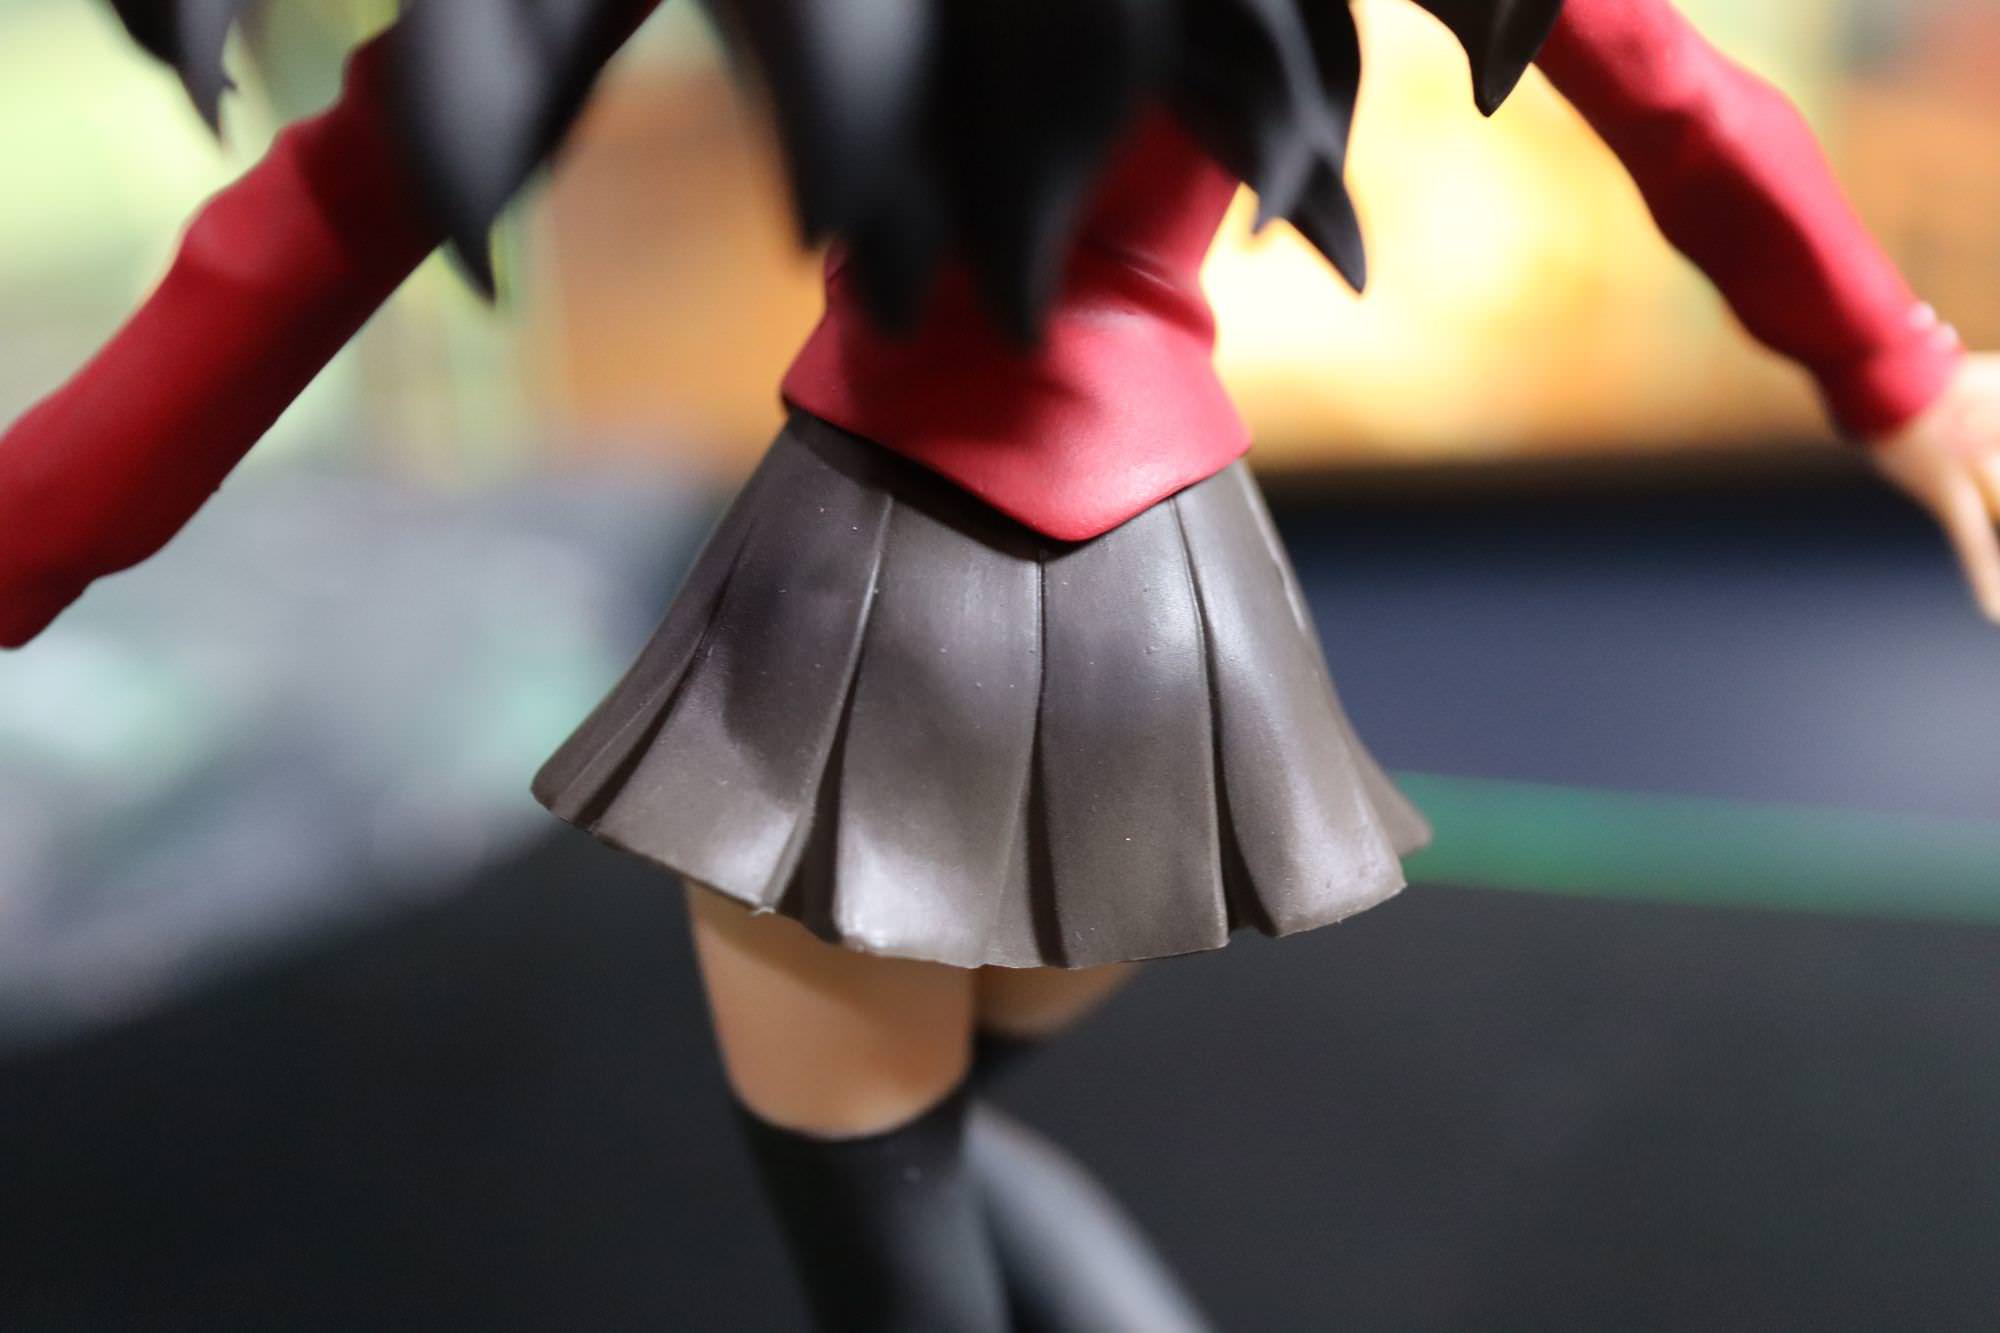 Finally, a normal Rin Tohsaka figure!